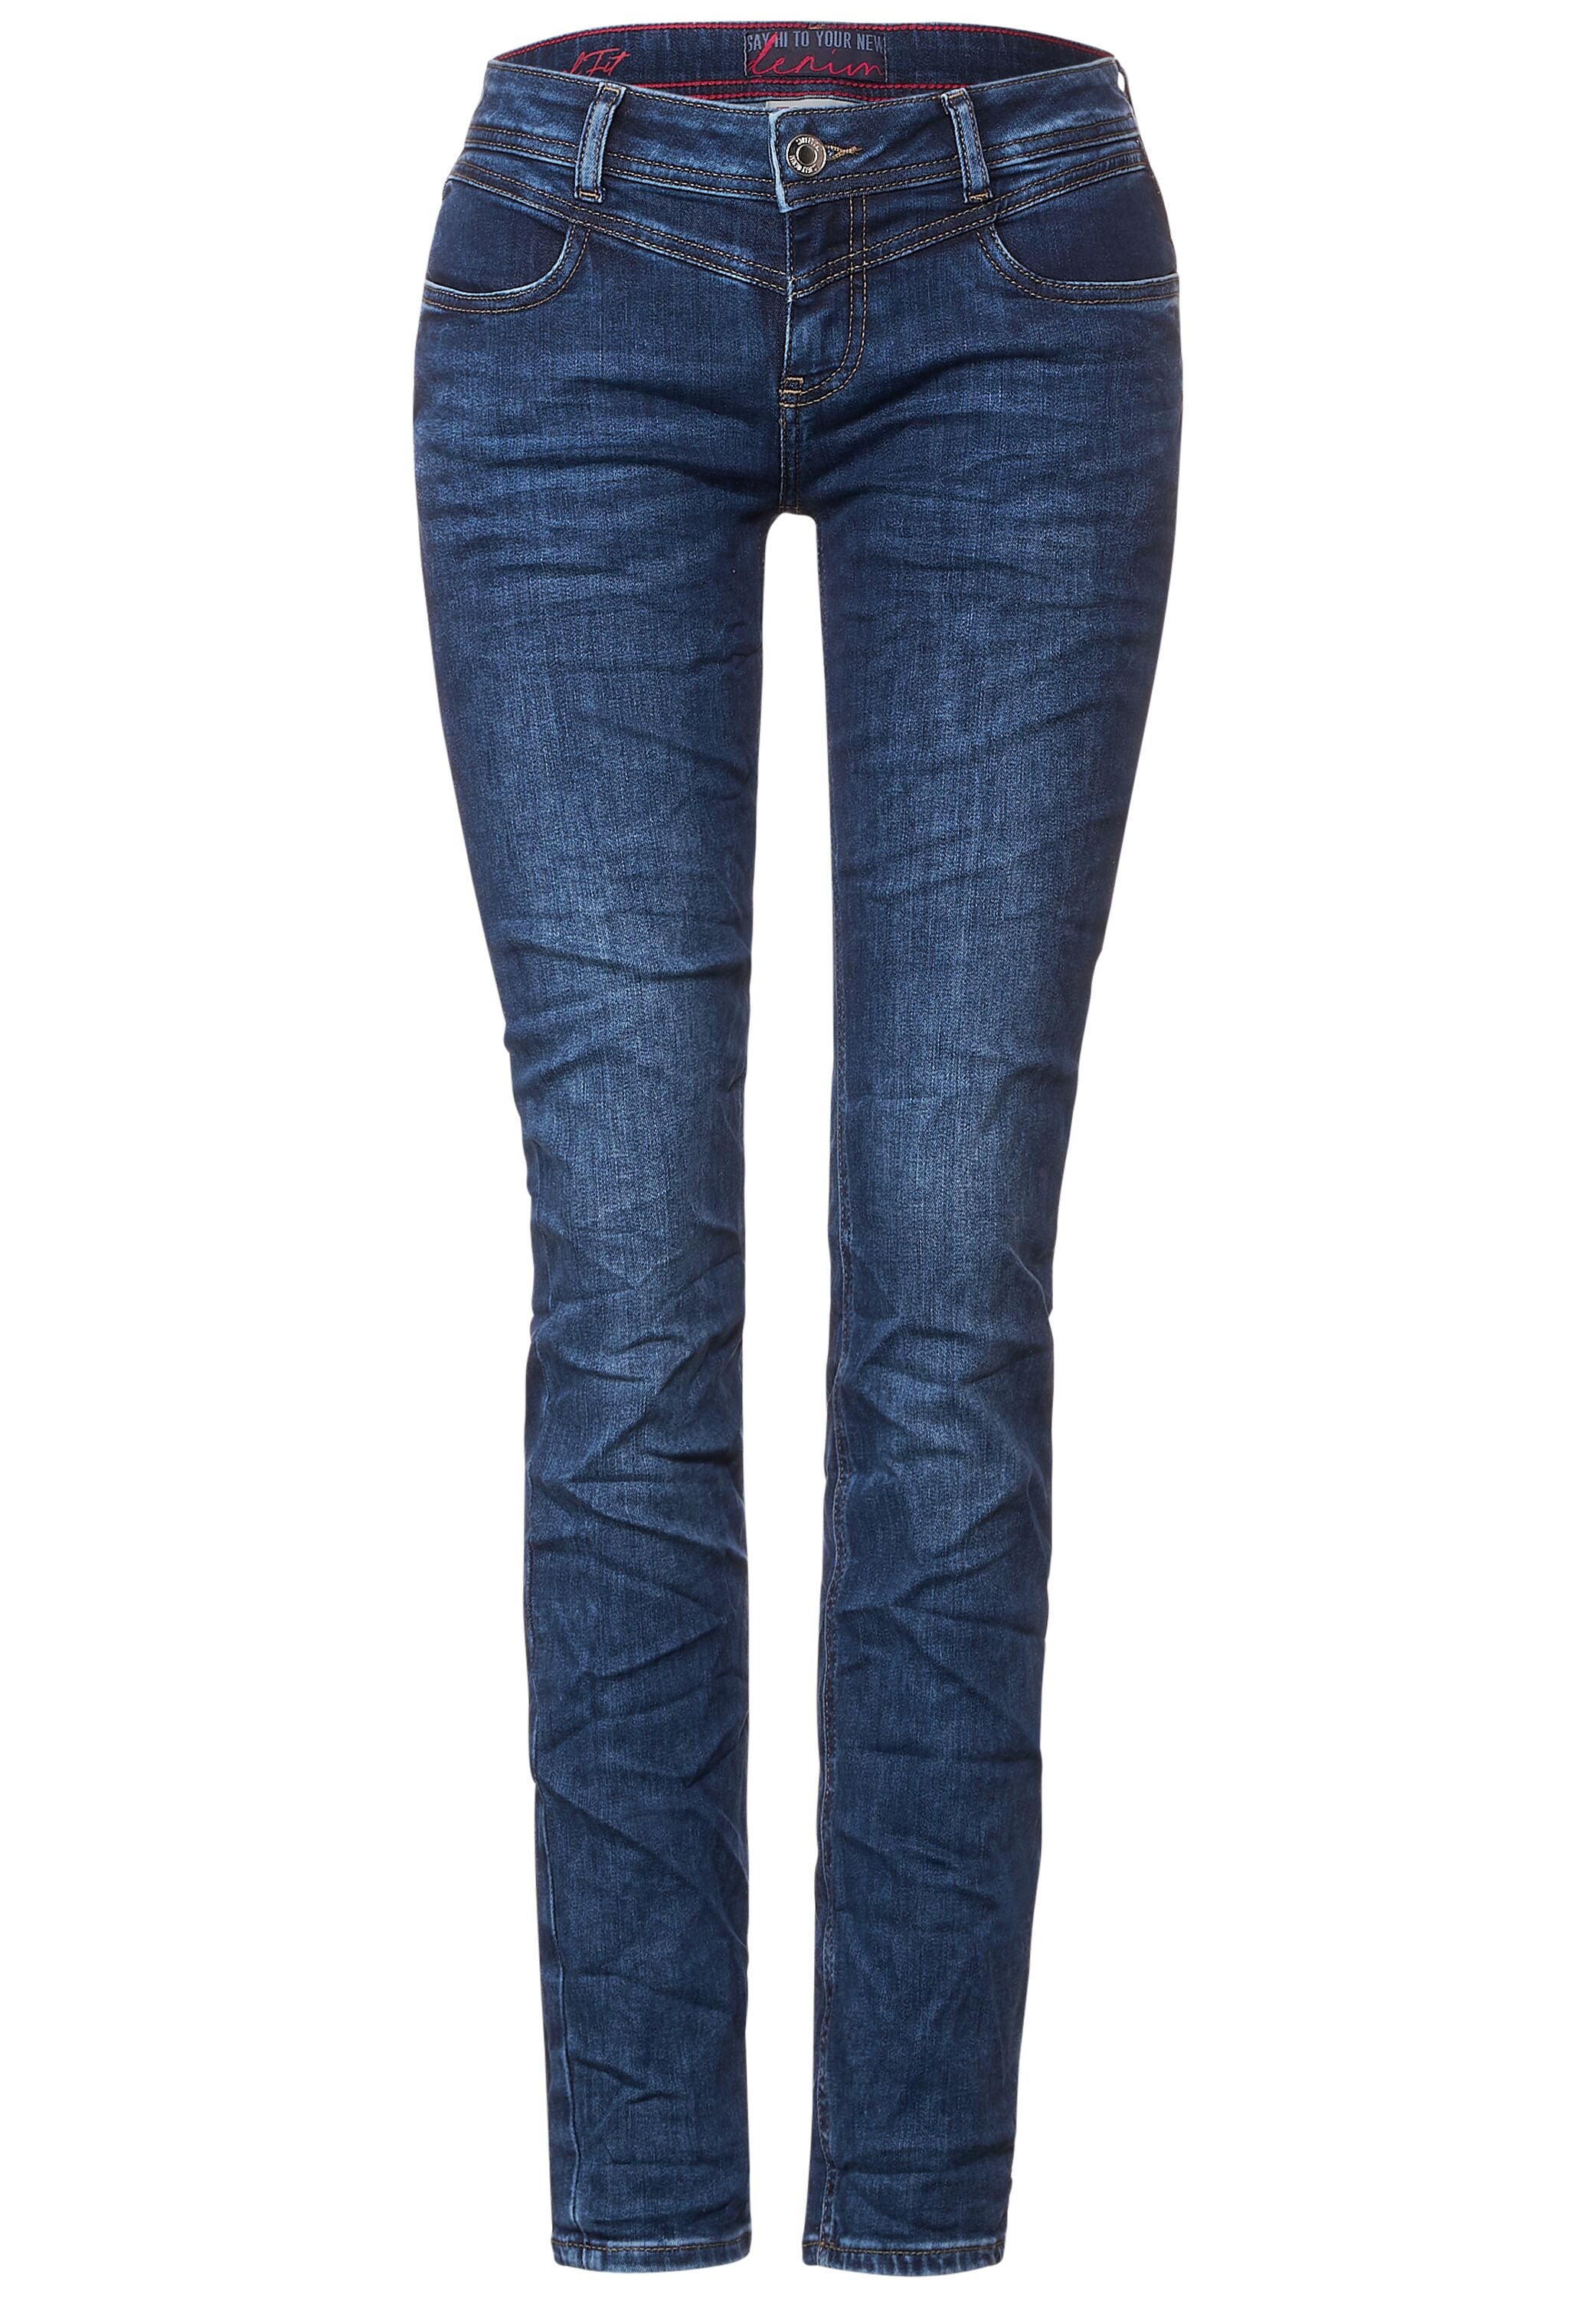 Gerade 4-Pocket ONE | Style Jeans, online I\'m STREET walking